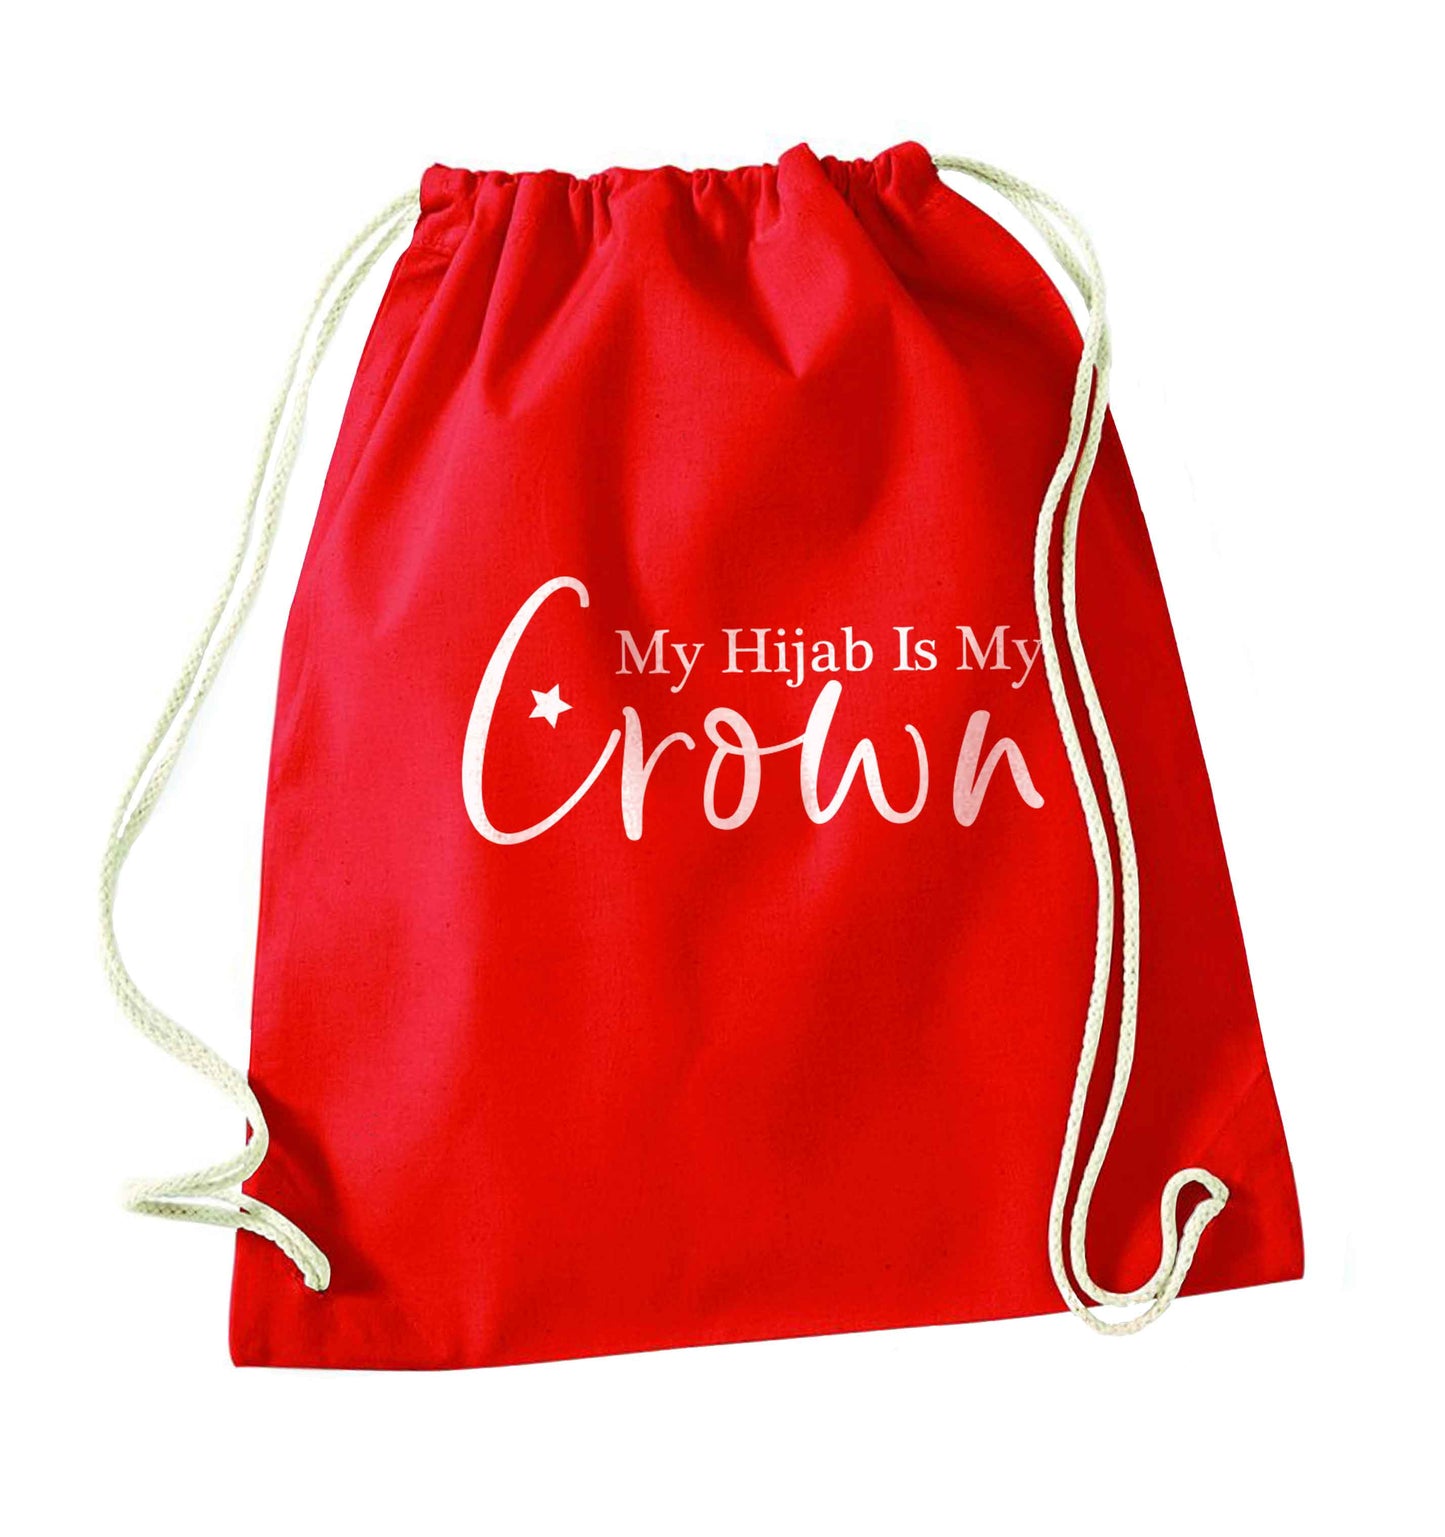 My hijab is my crown red drawstring bag 